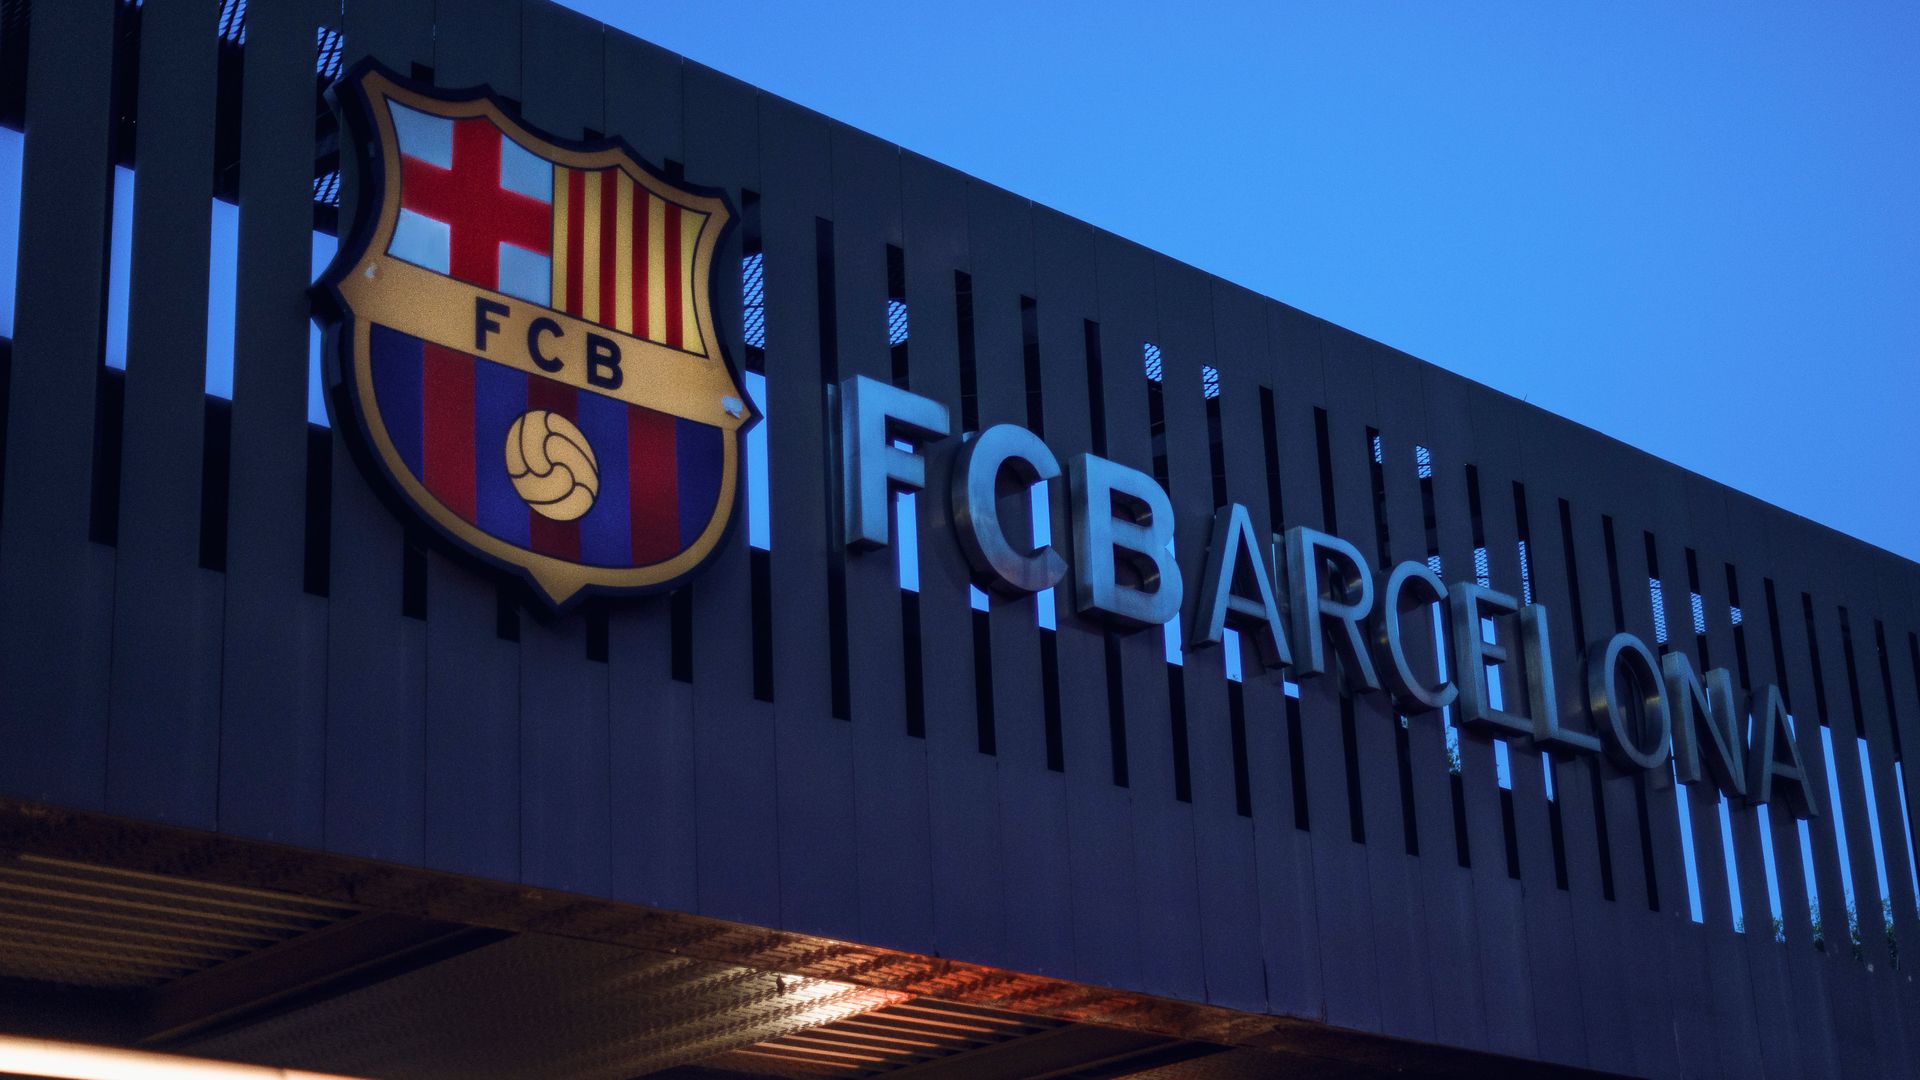 Barca, Real reject La Liga's proposed CVC deal